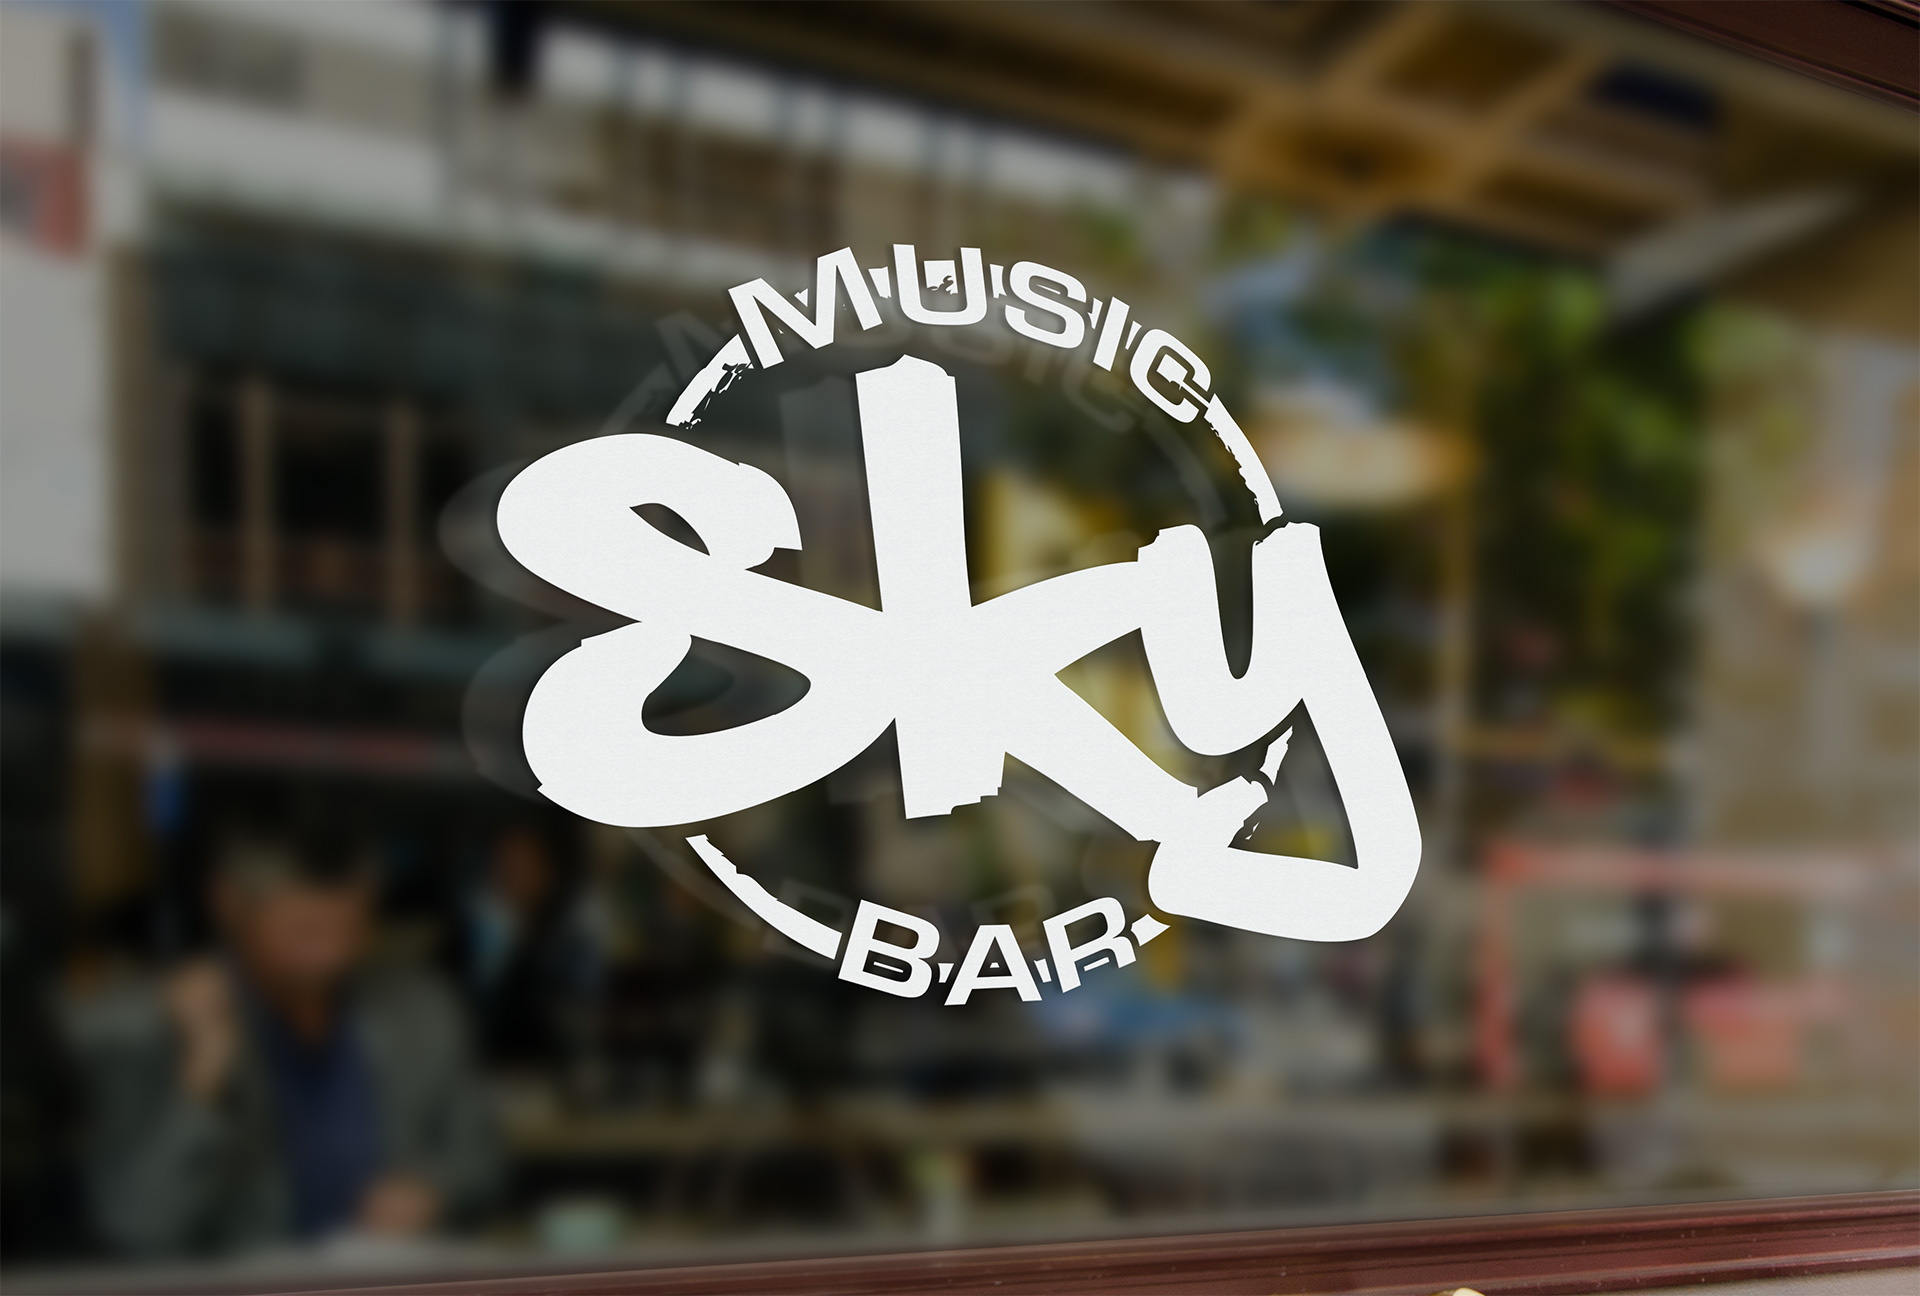 Sky bar